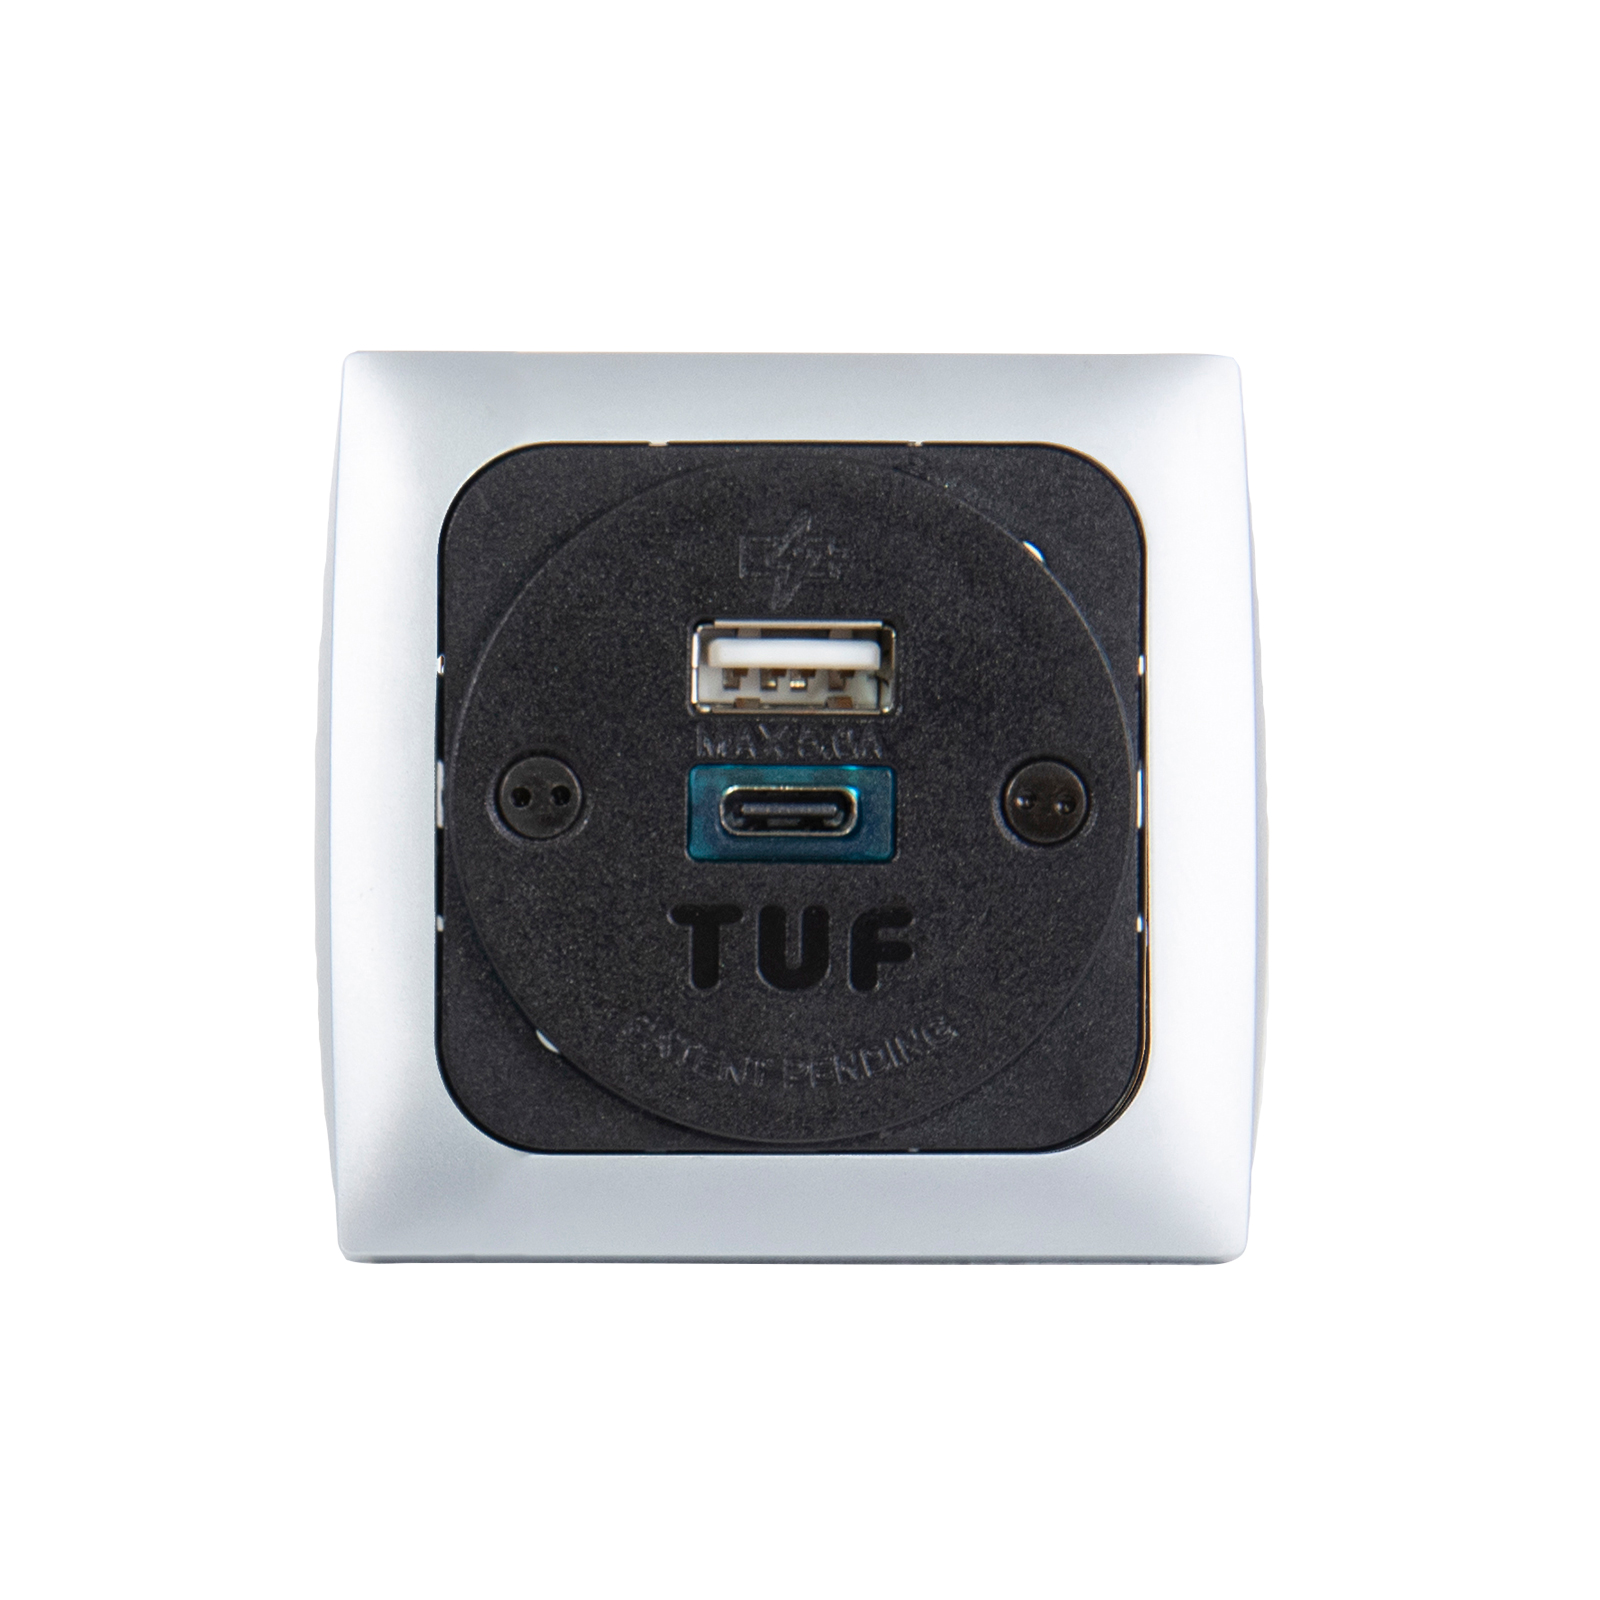 Plug Socket Proton panel mounted power module 1 x UK socket, 1 x TUF (A&C connectors) USB charger - silver/black